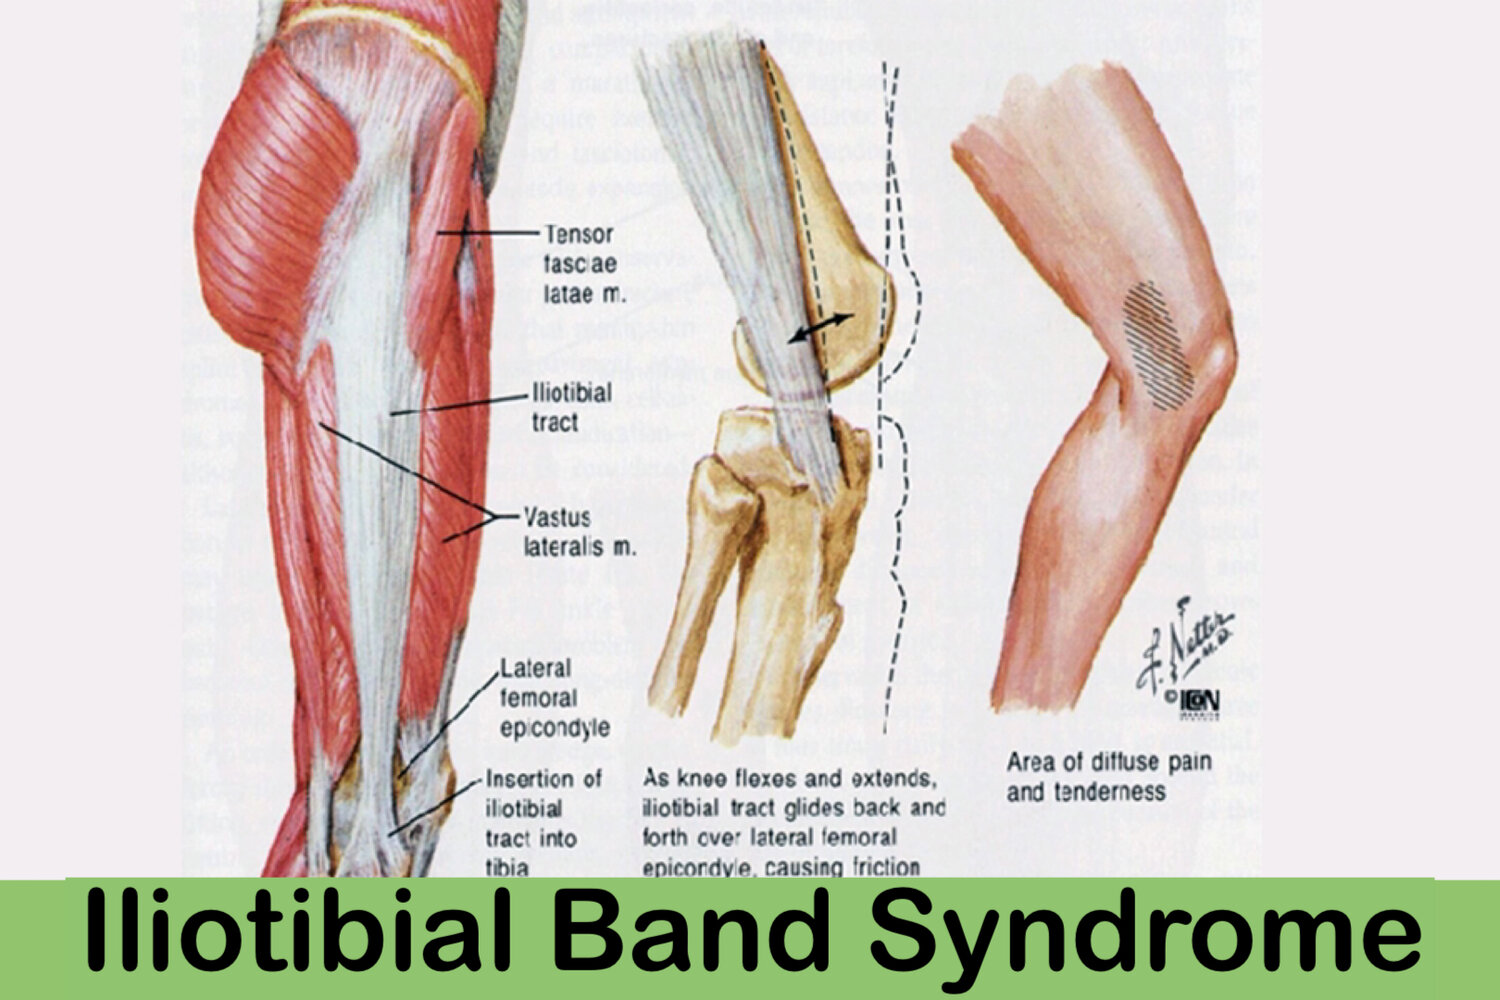 iliotibial band syndrome itbs jelentése magyarul